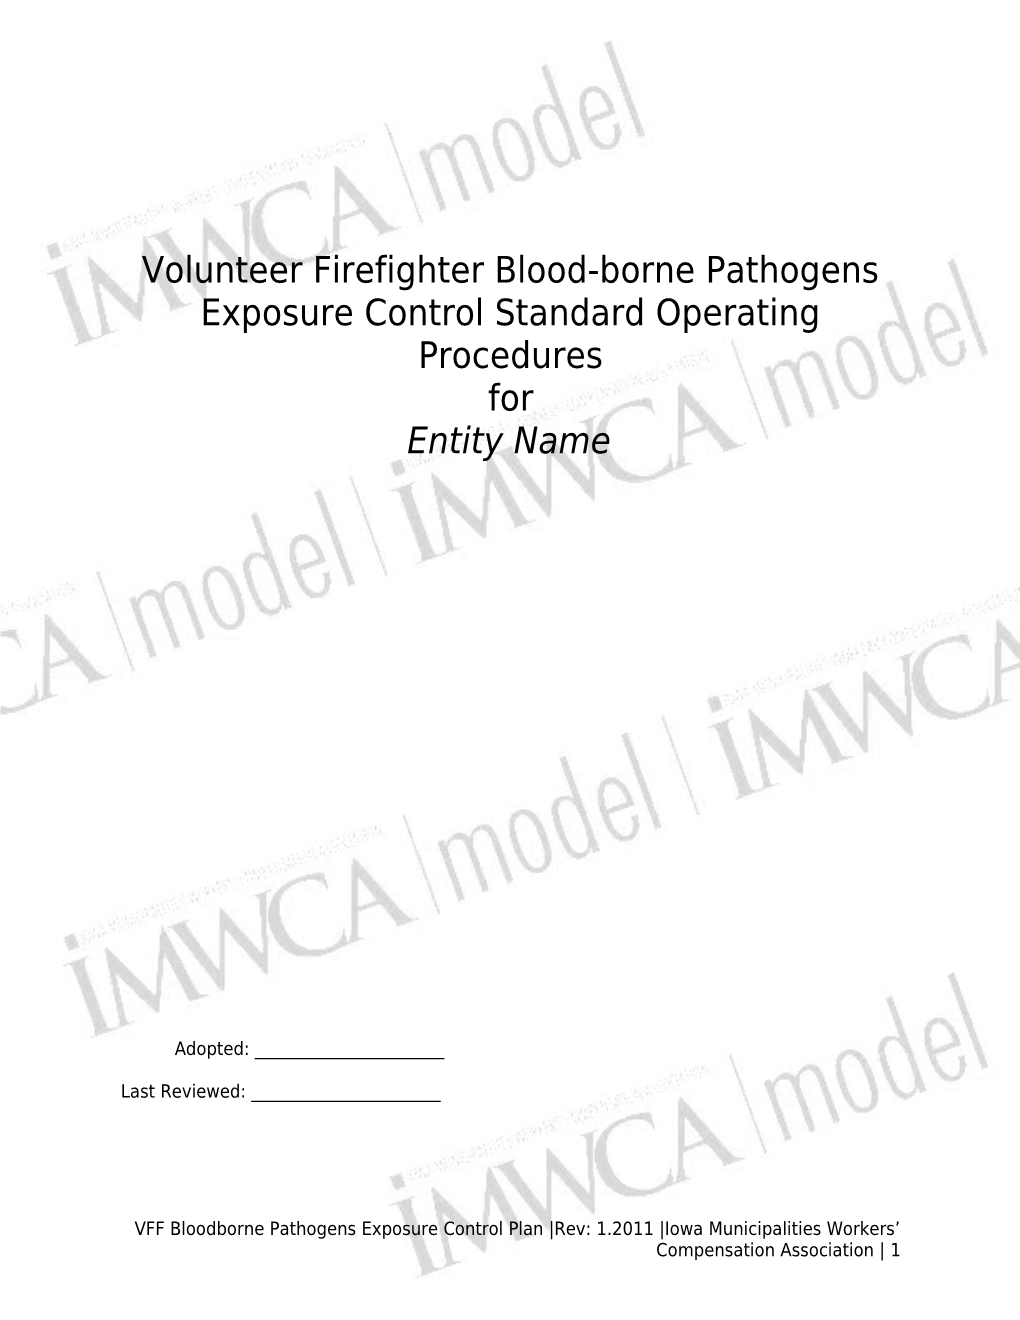 Volunteer Firefighter Blood-Borne Pathogens